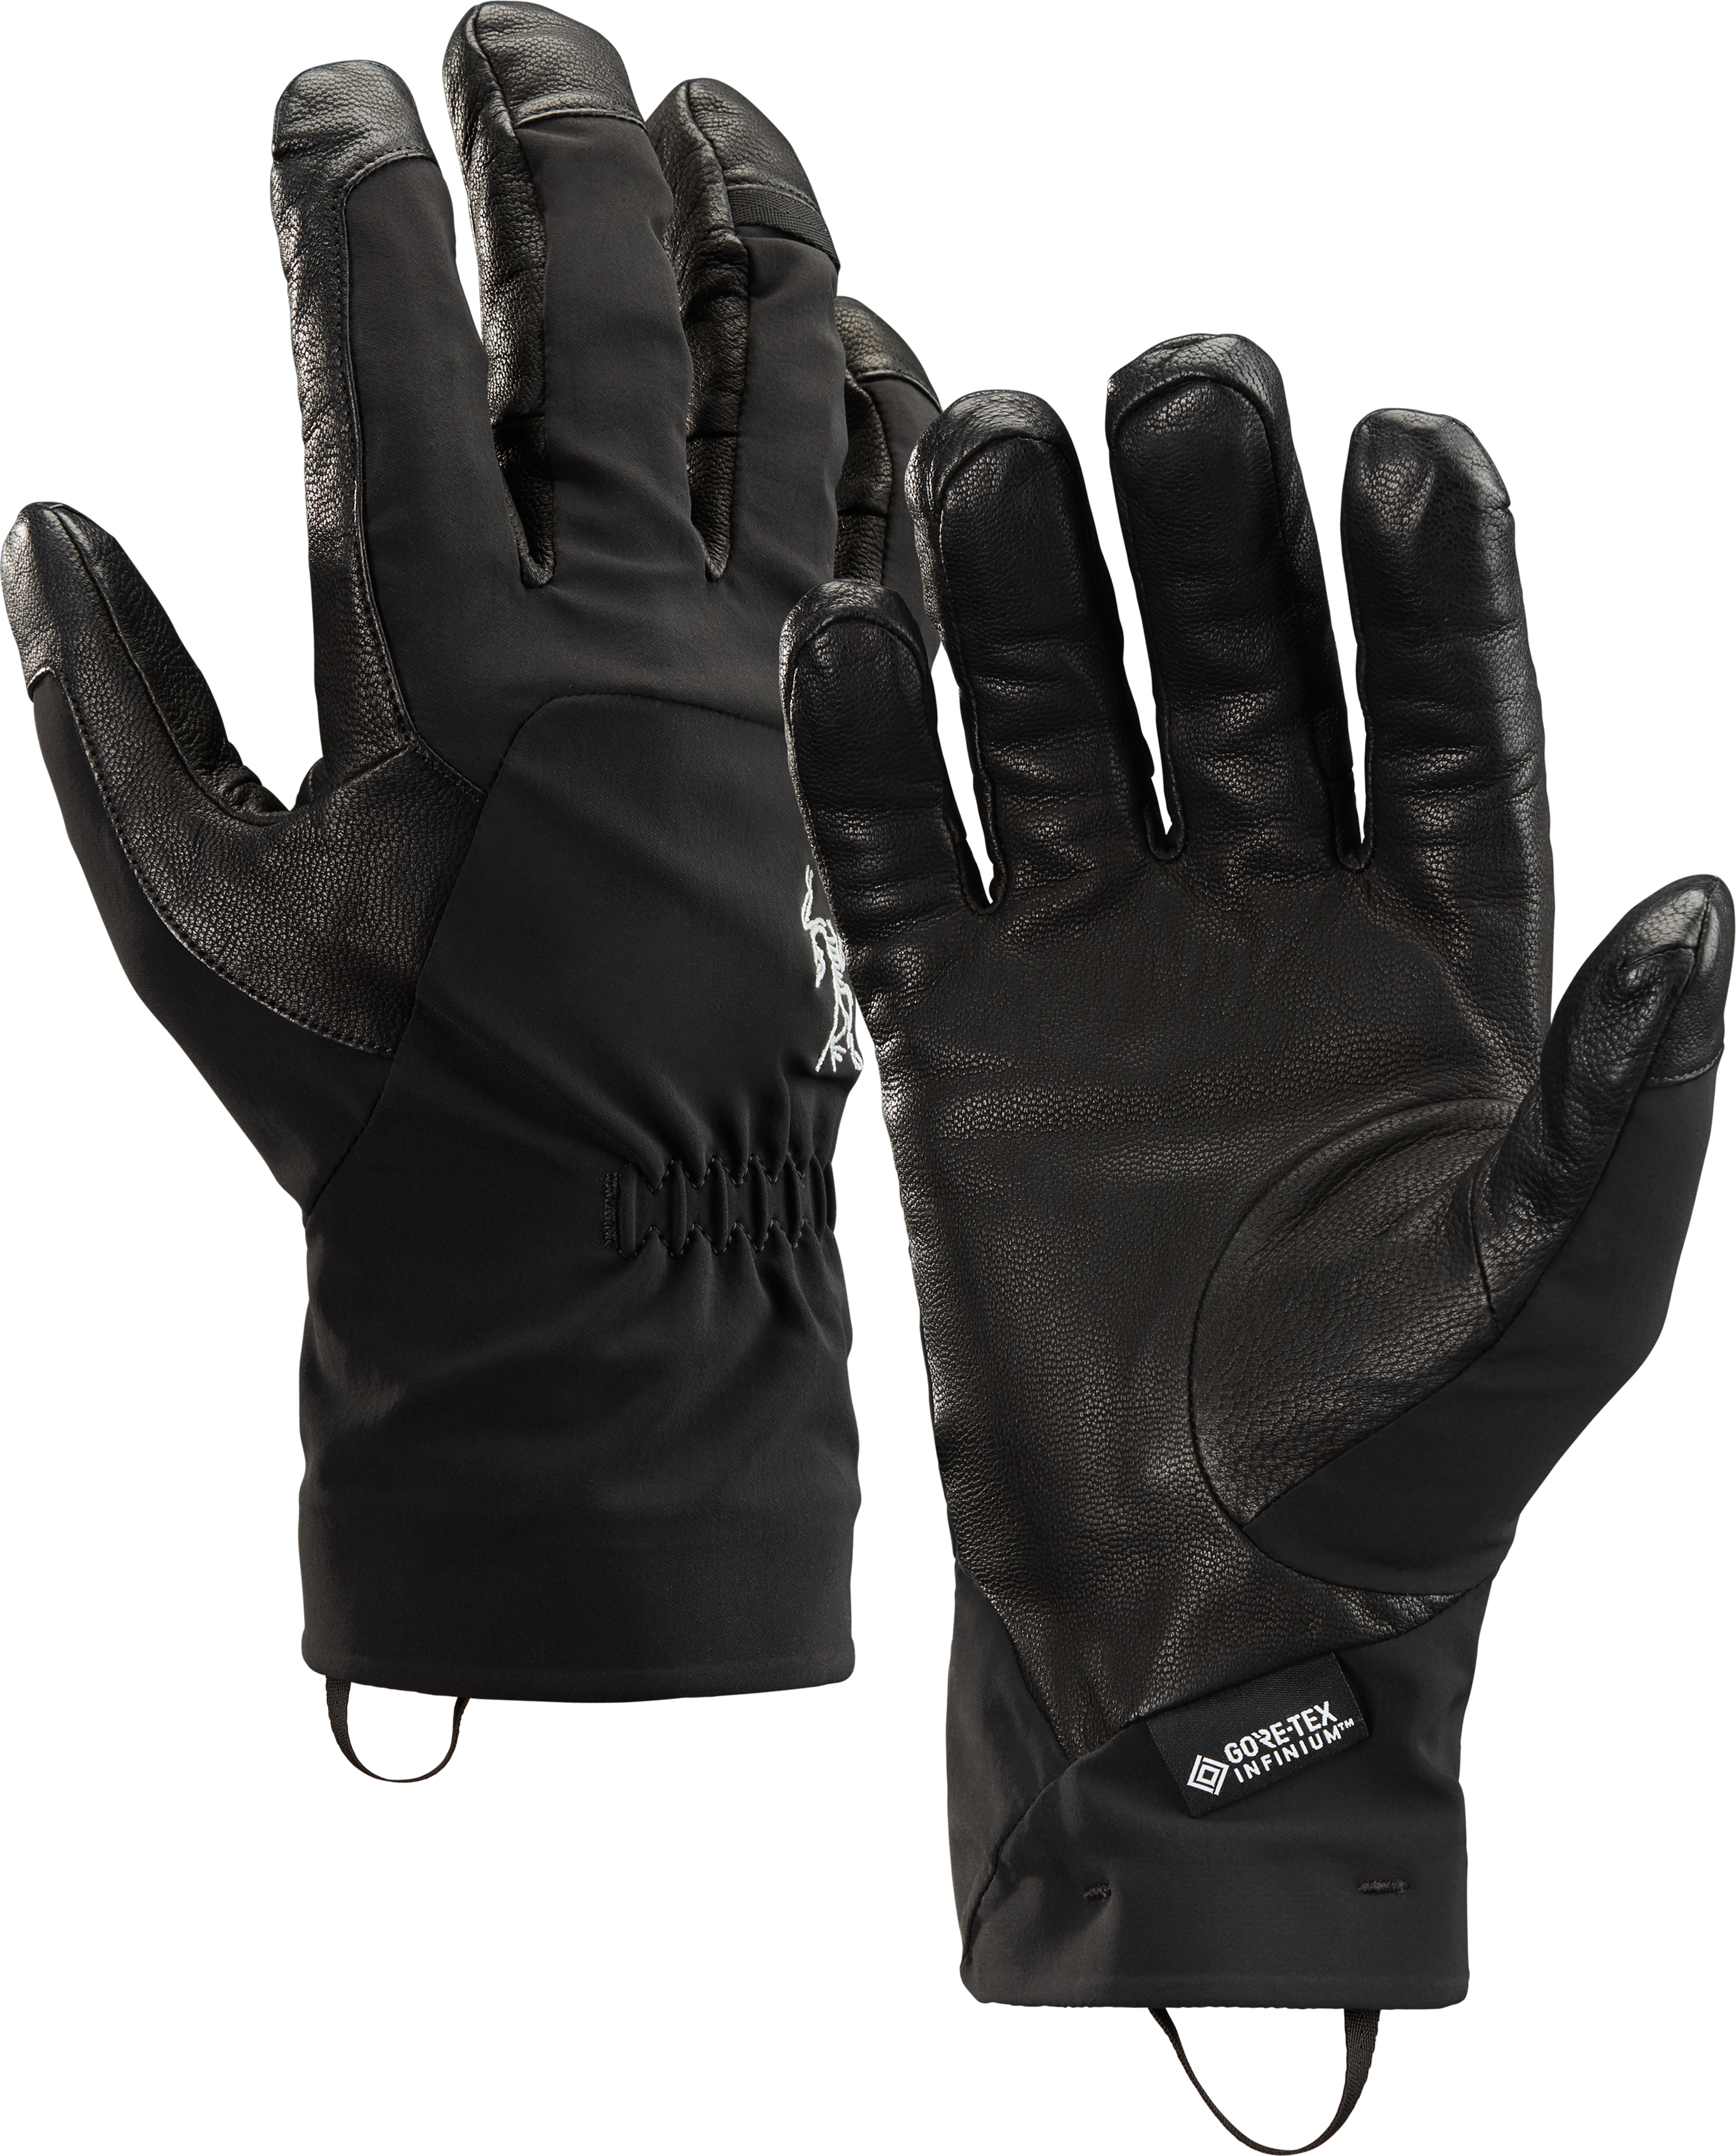 Arcteryx Venta AR Glove Black